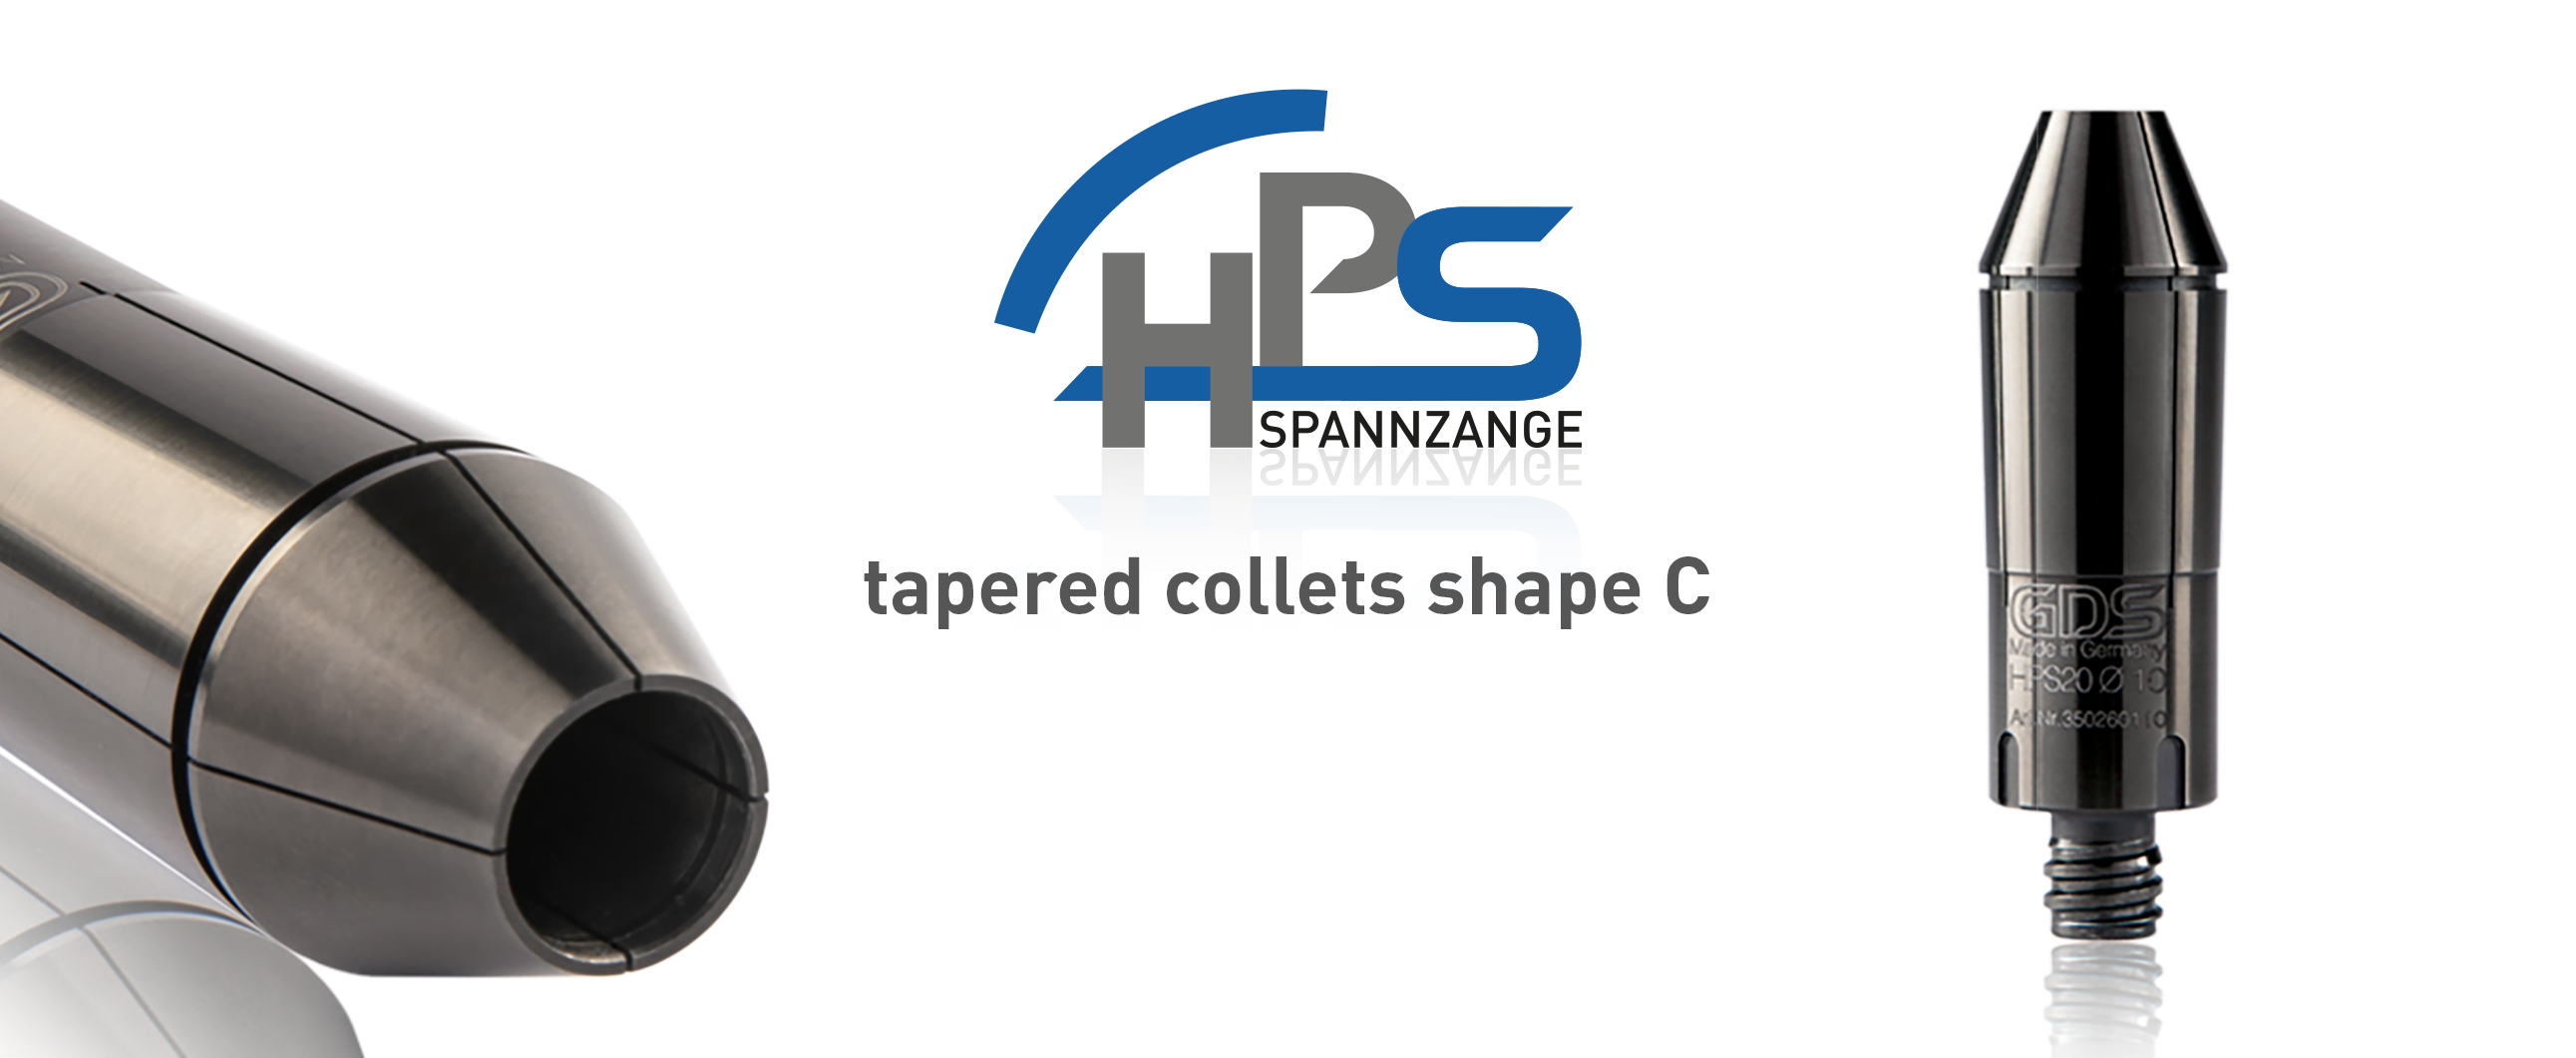 tapered HPS collets shape C